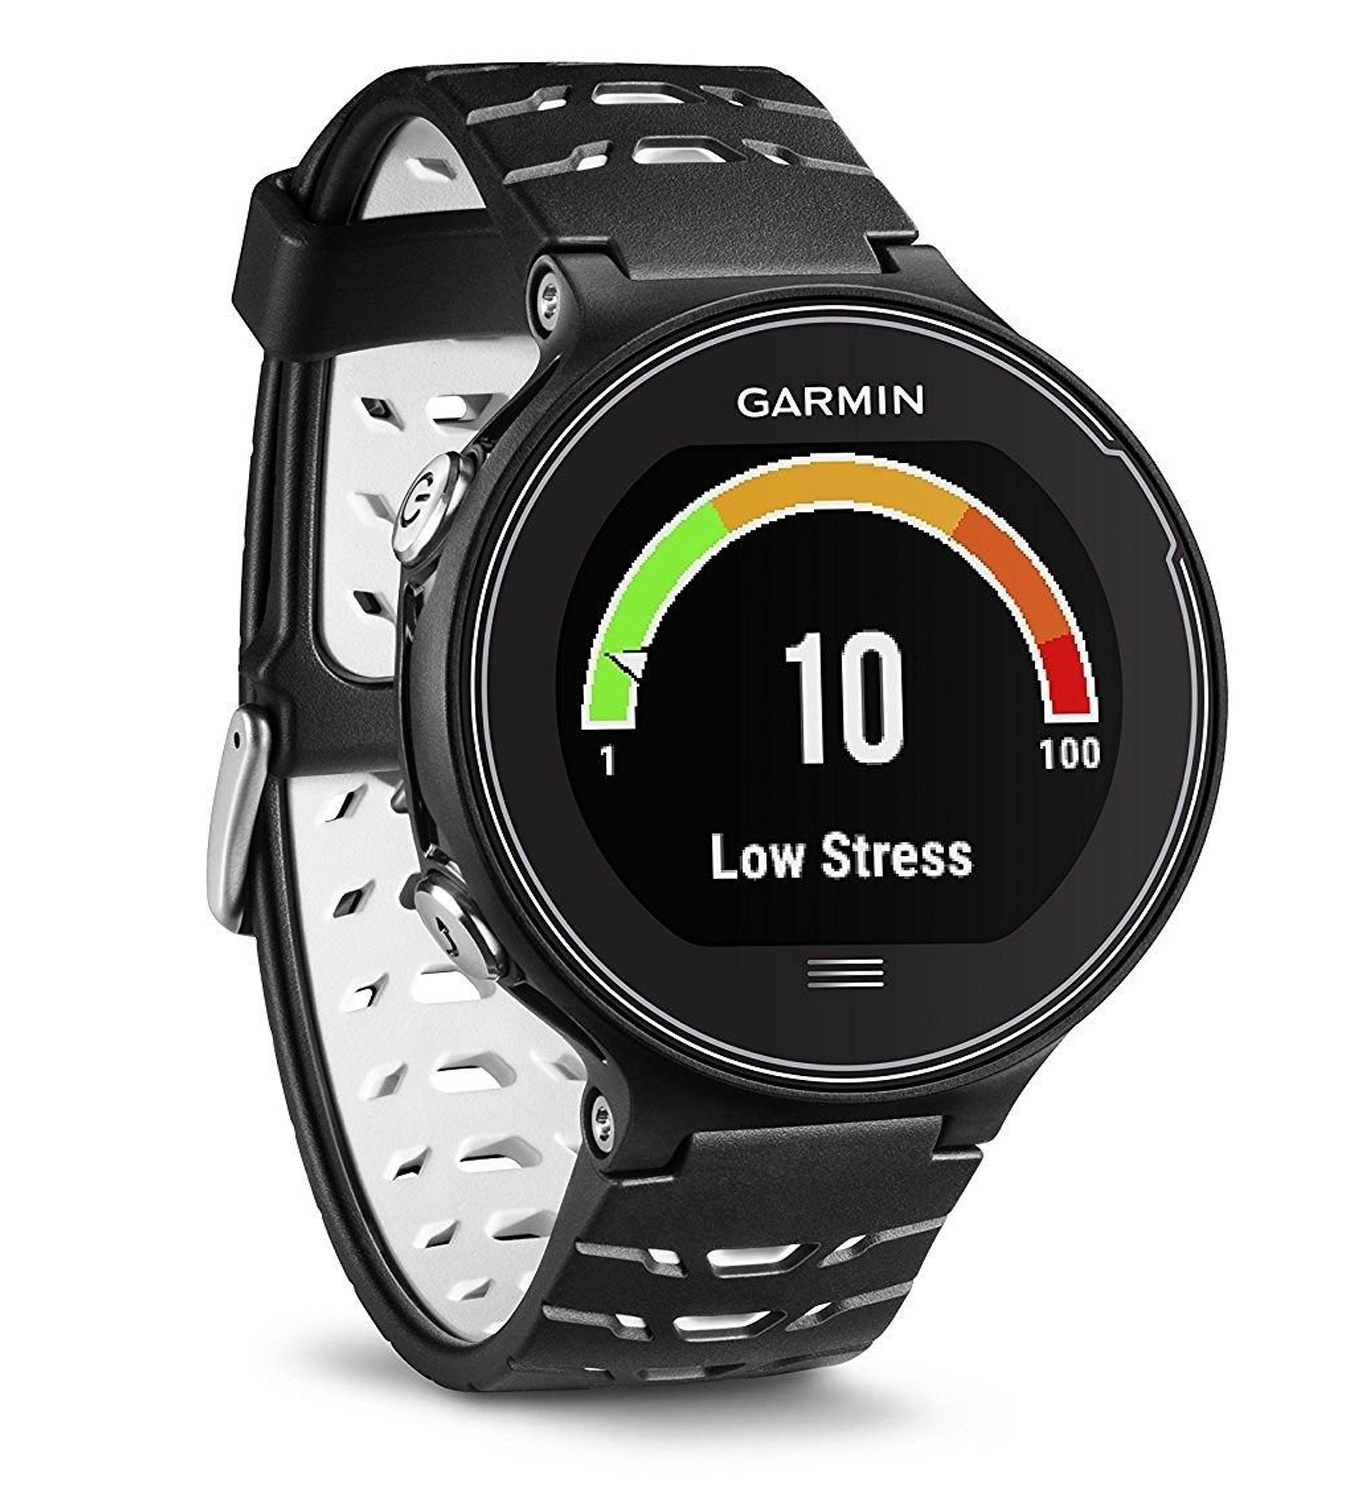 Đồng hồ Garmin Forerunner 630 Fitness GPS Touchscreen Smart Watch - Black/White (Certified Refurbished)